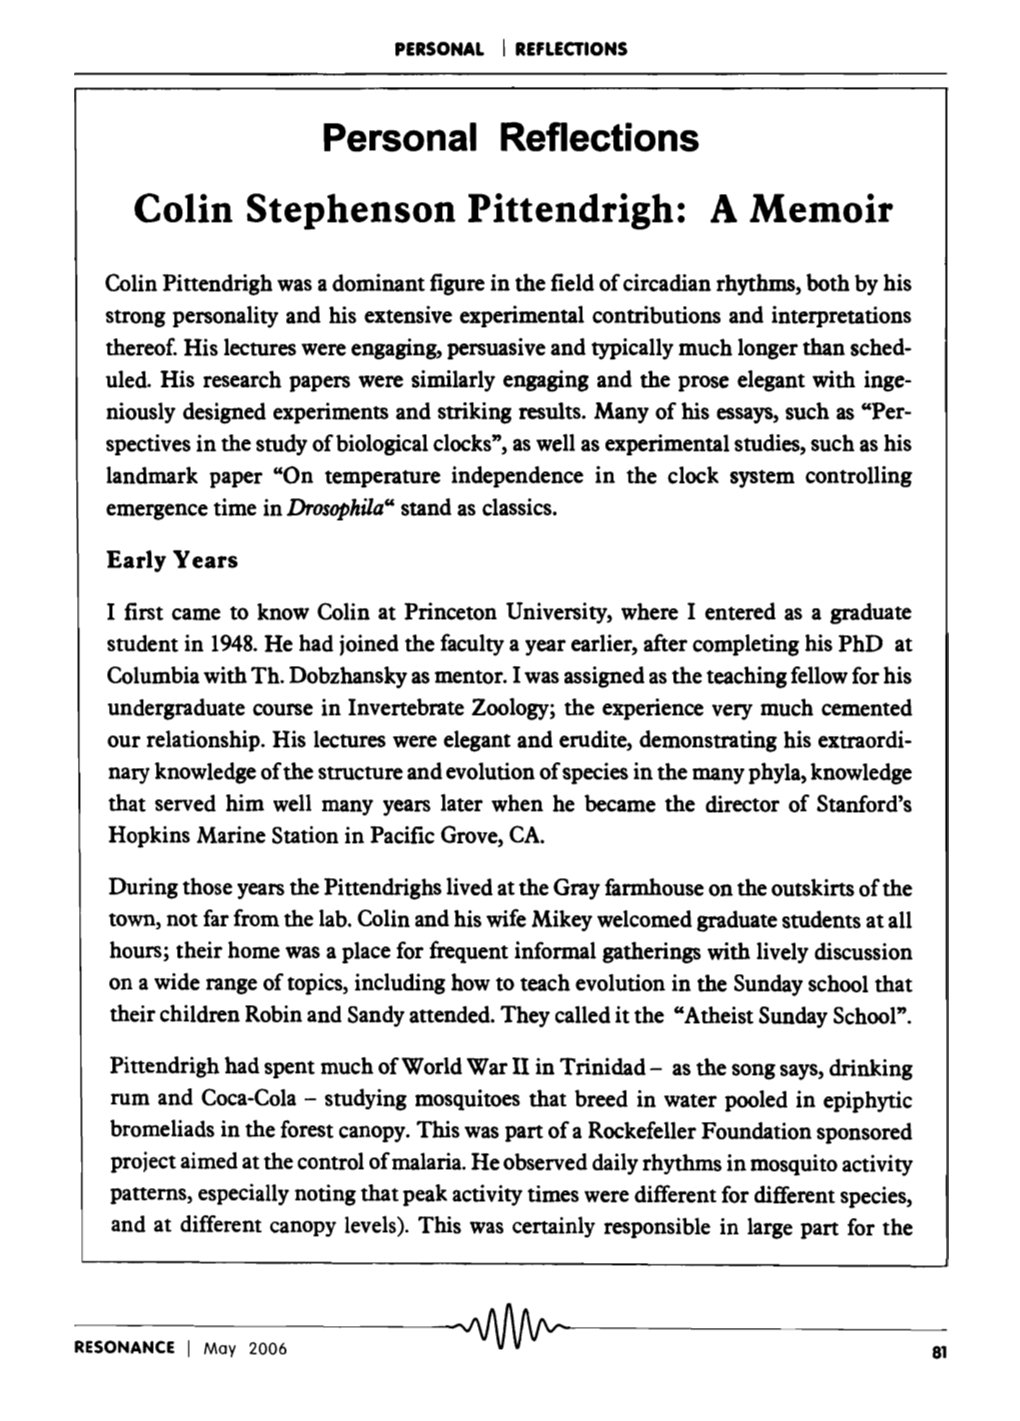 Colin Stephenson Pittendrigh: a Memoir